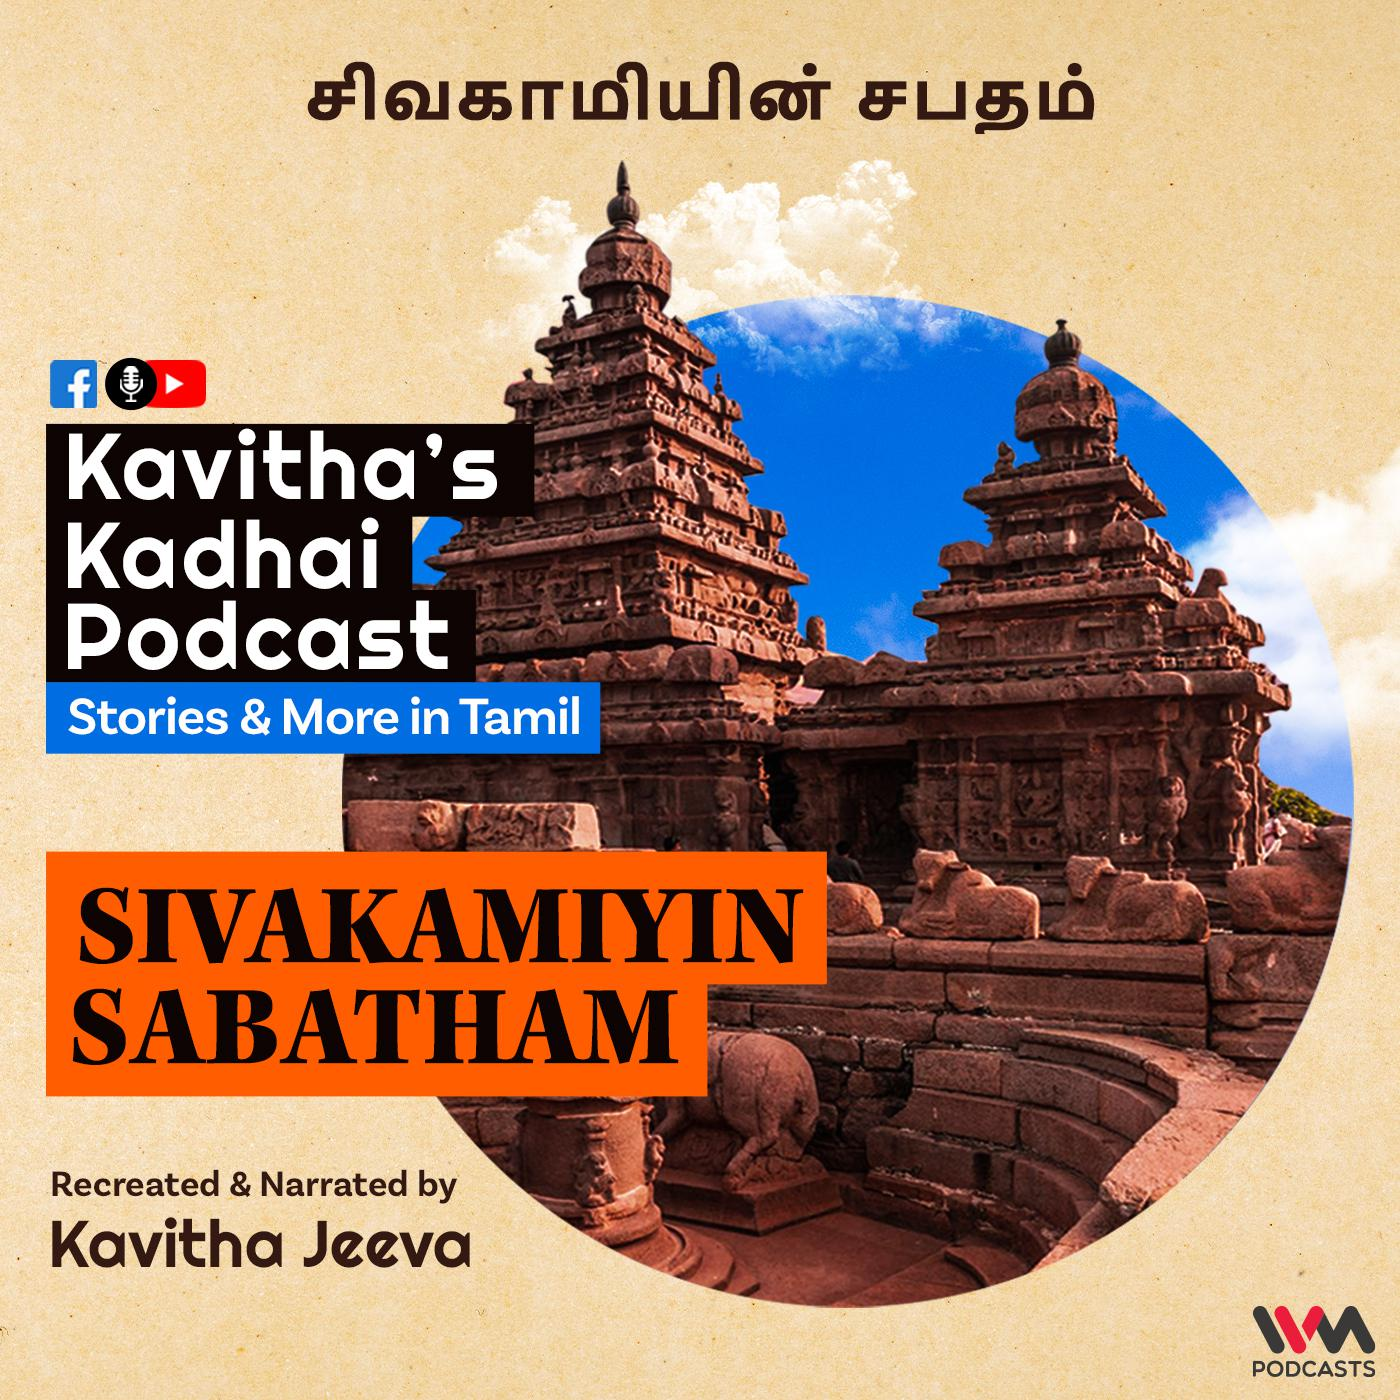 KadhaiPodcast’s Sivakamiyin Sabatham with Kavitha Jeeva - Episode #136